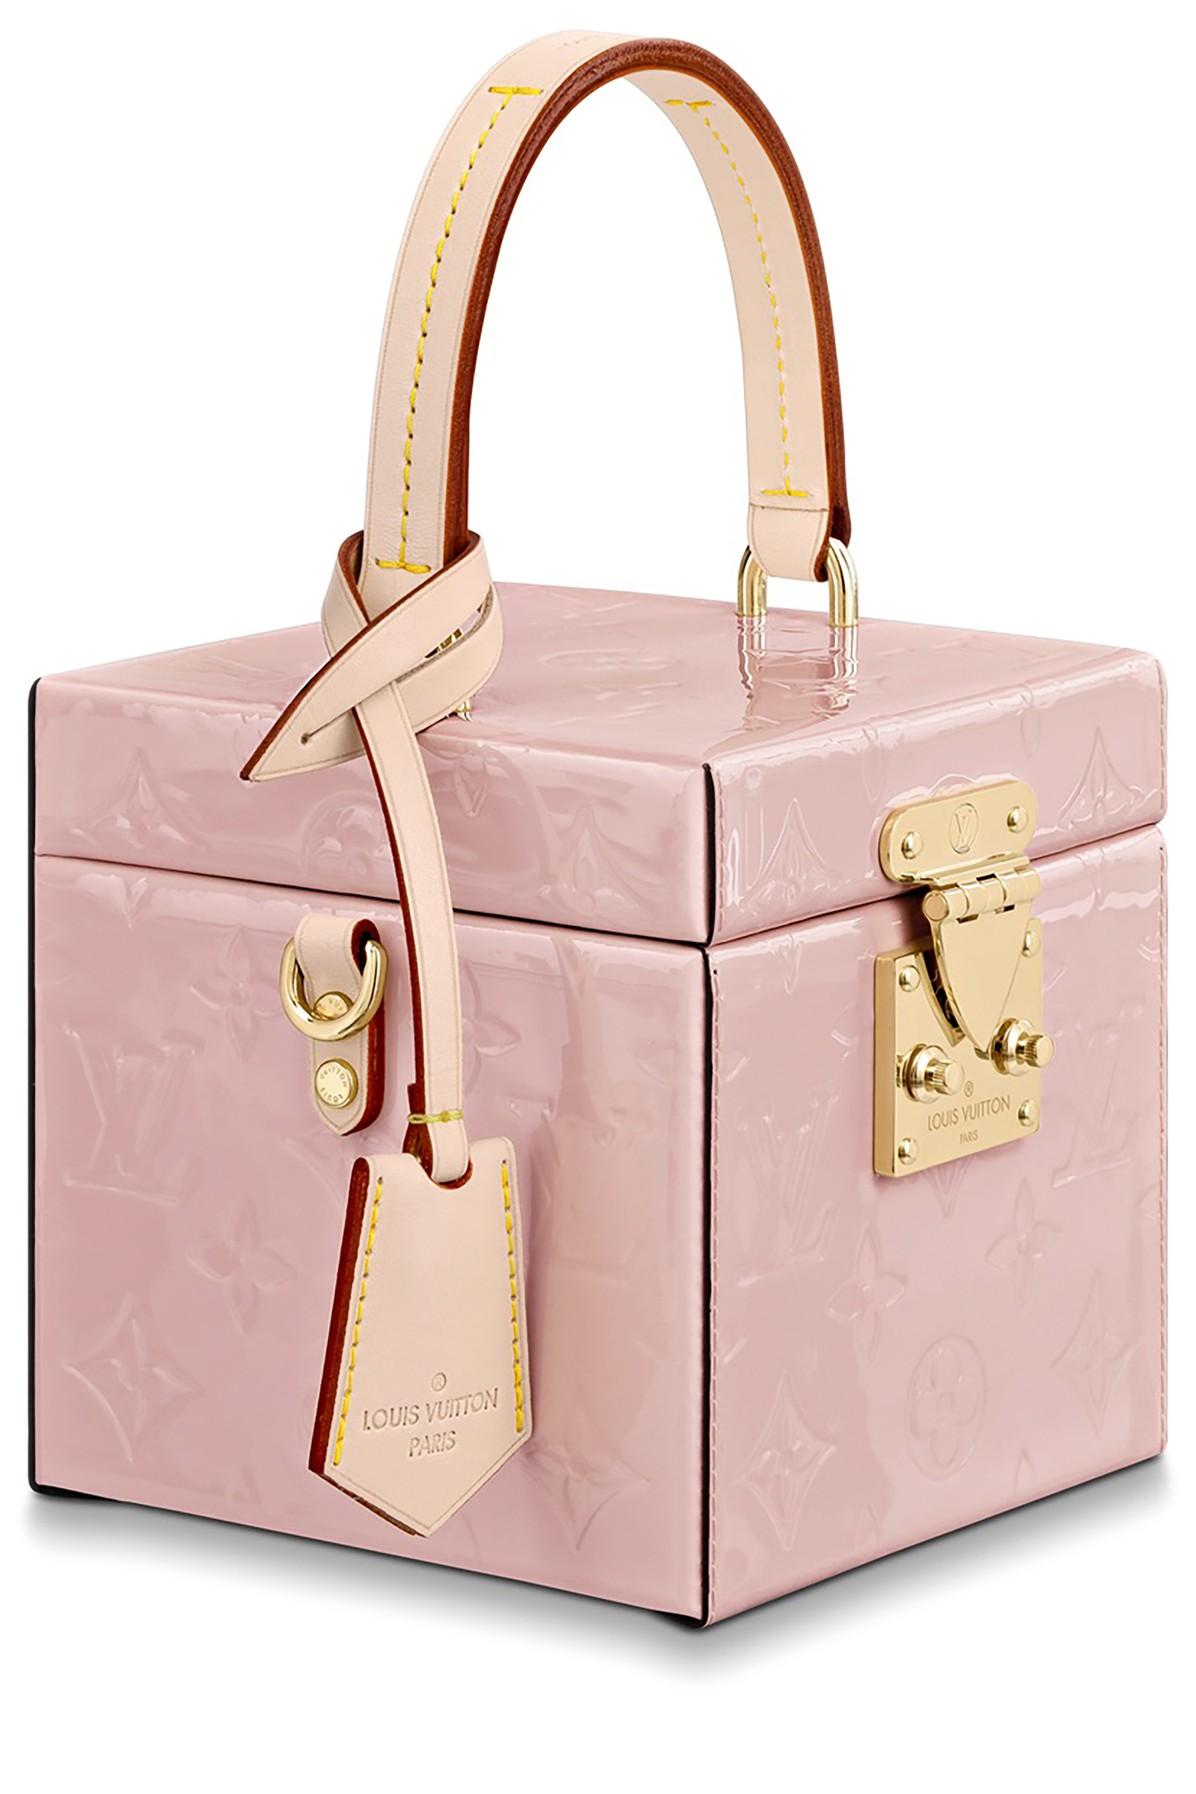 lv purse box